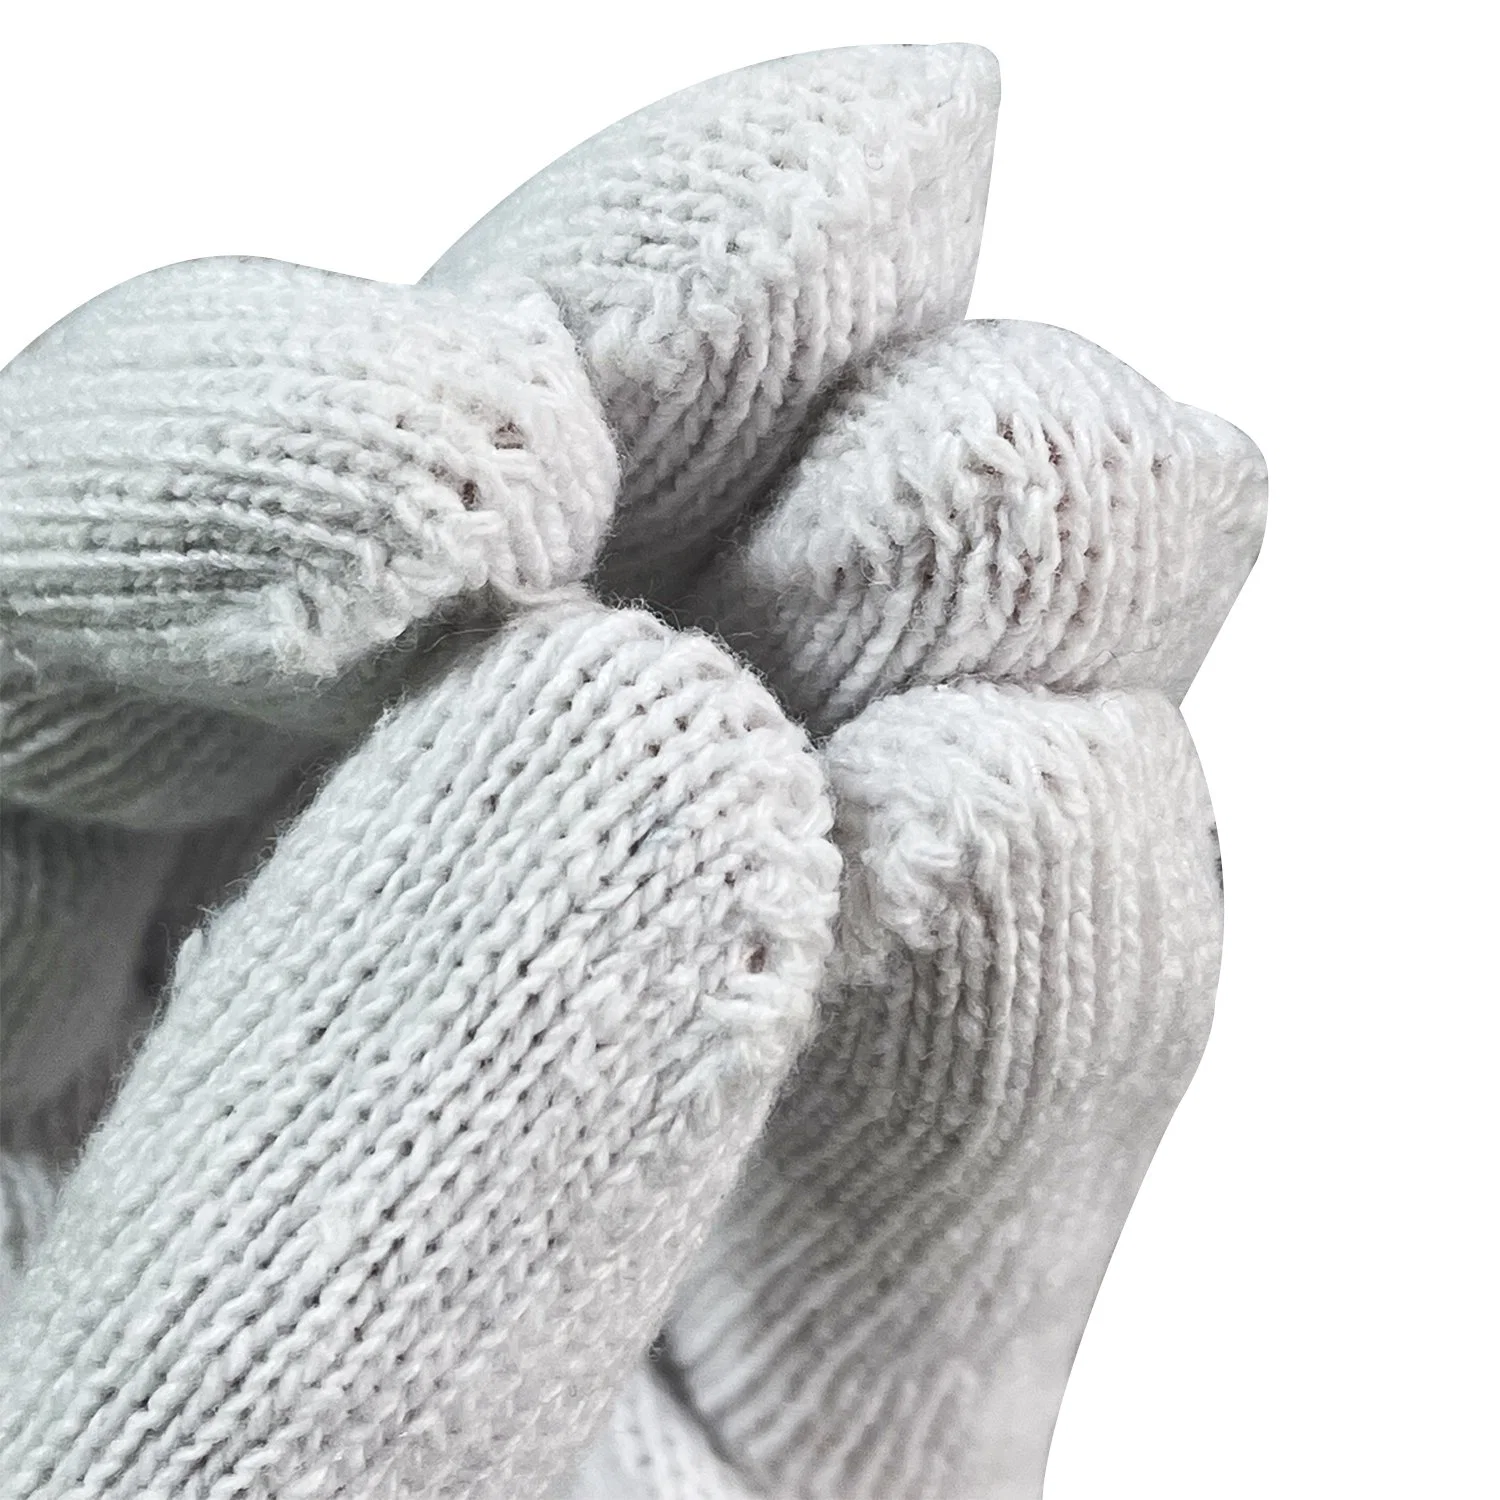 Industrial Cheap White Cotton Gloves Knitted Work Hand Gardening Safety Gloves